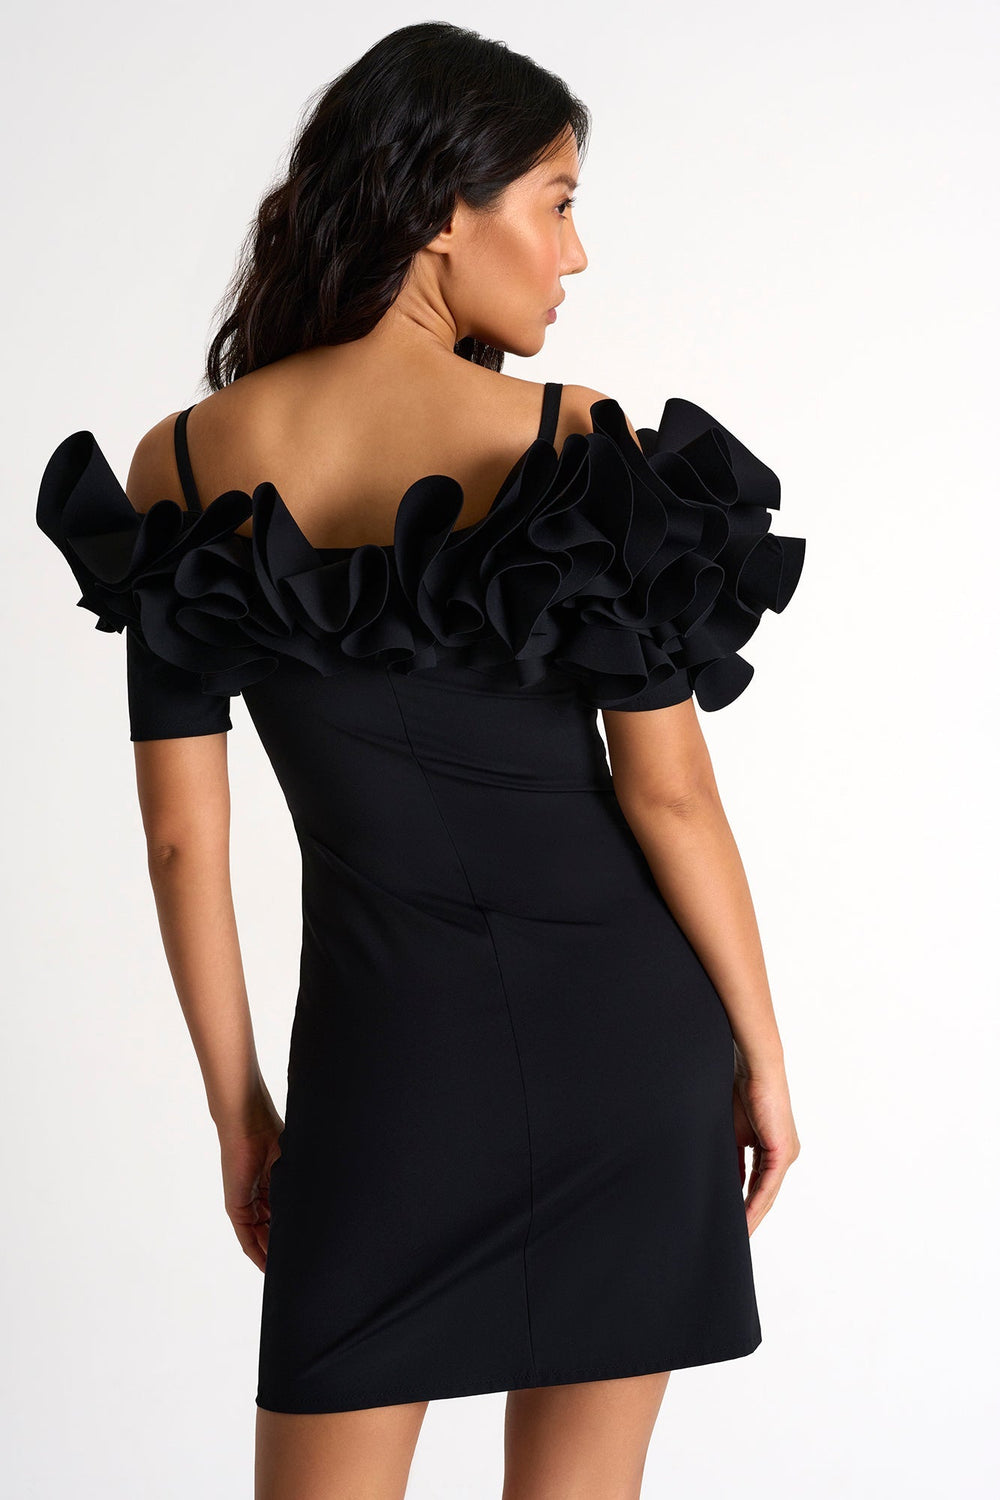 Off Shoulder One Of A Kind Hand-Made Dress - 42495-65-800 2 / 800 Caviar / 75% POLYAMIDE, 25% ELASTANE